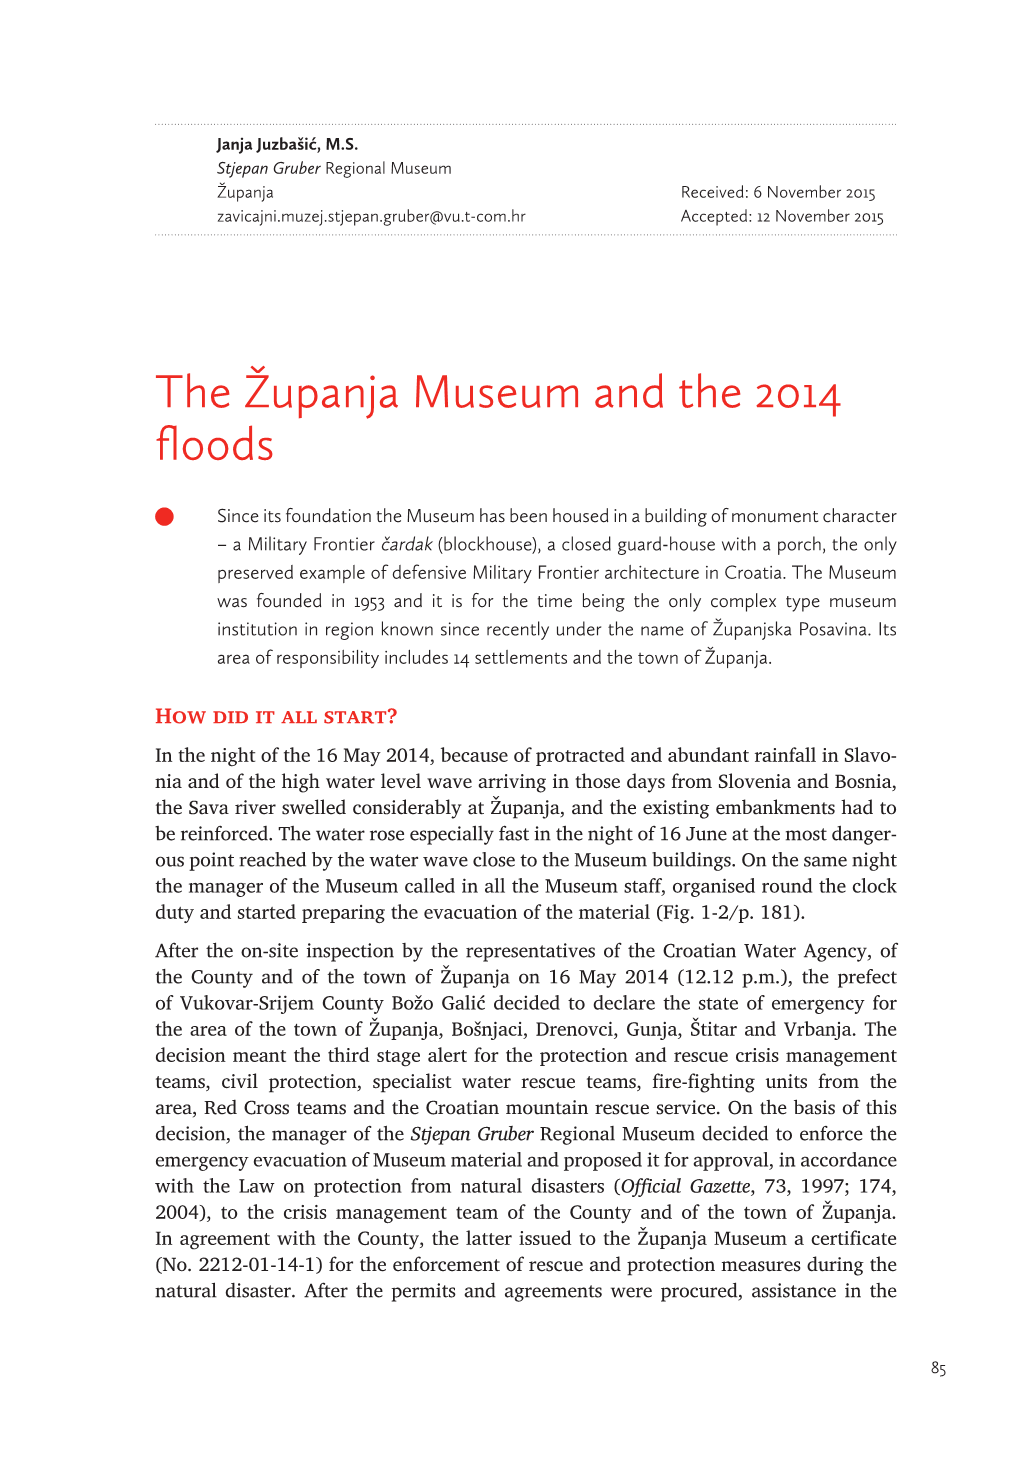 The Županja Museum and the 2014 Floods